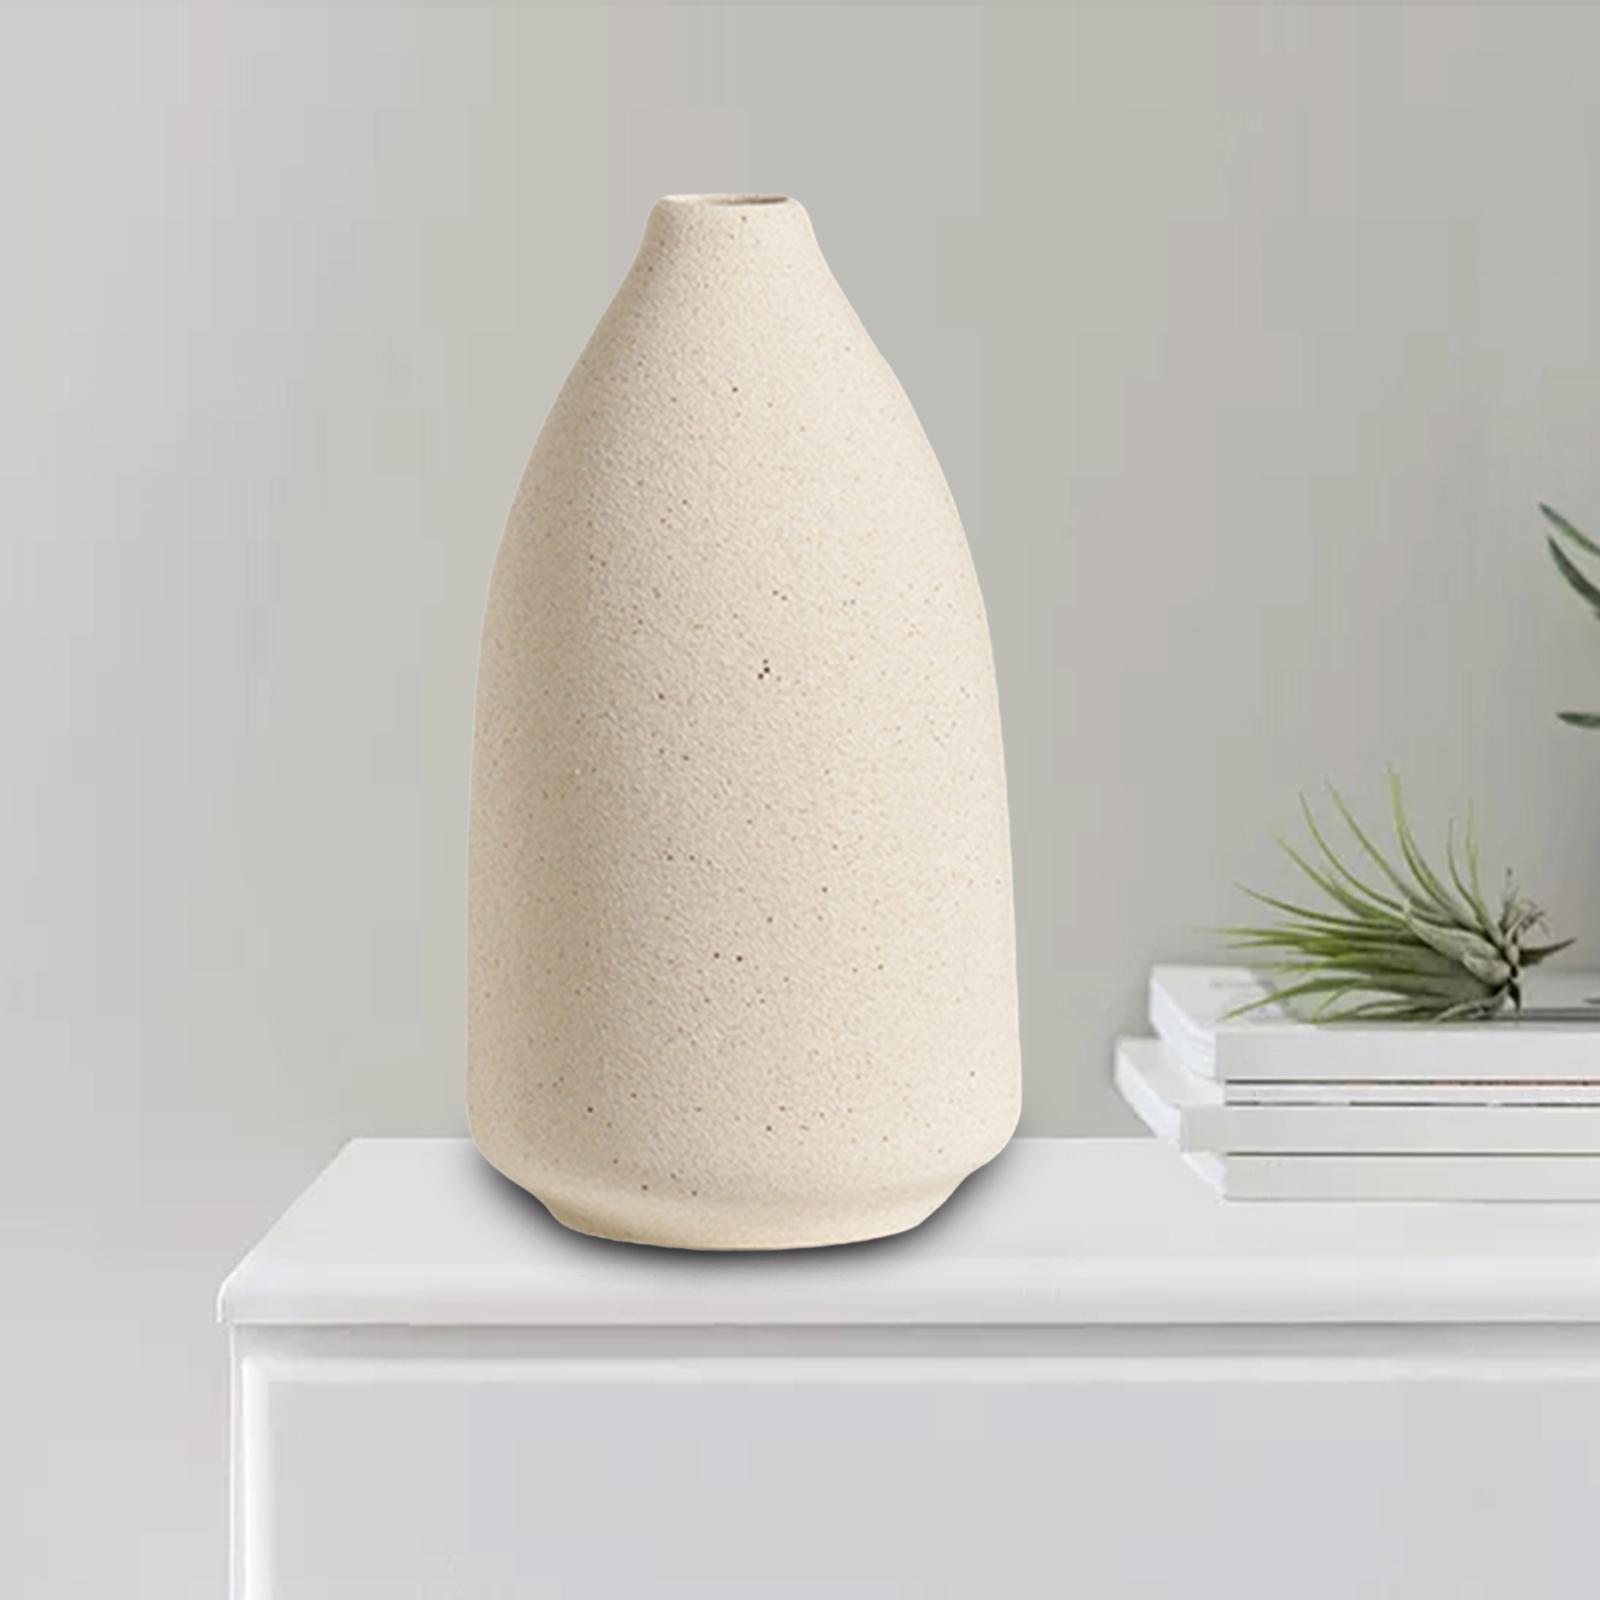 4x Ceramic Vase Home Living Room Flower Vase Centerpieces